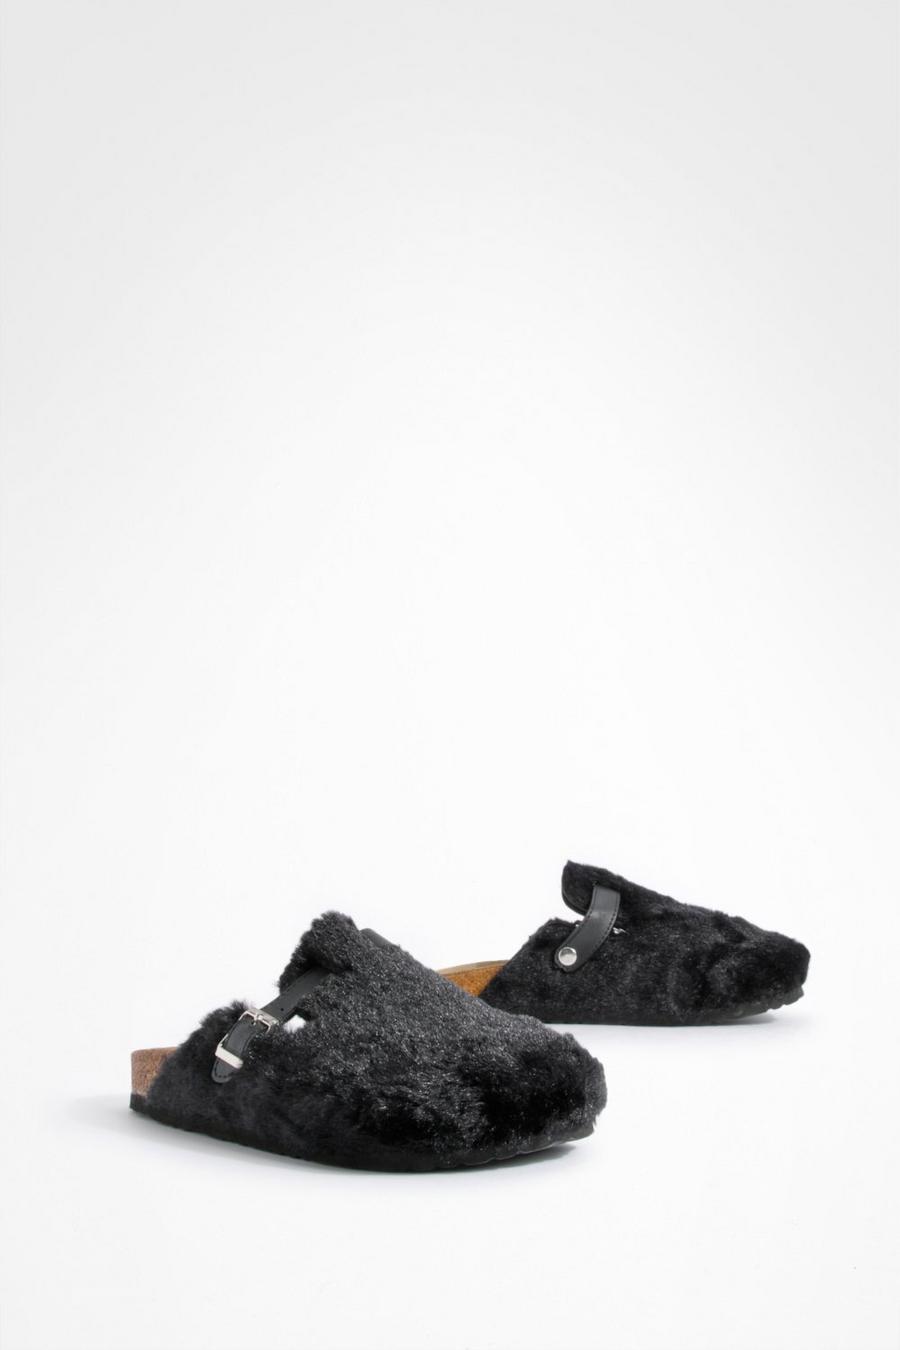 Black Fur Nike Air Max 97 Women S Shoes Obsidian Gorge Grees   